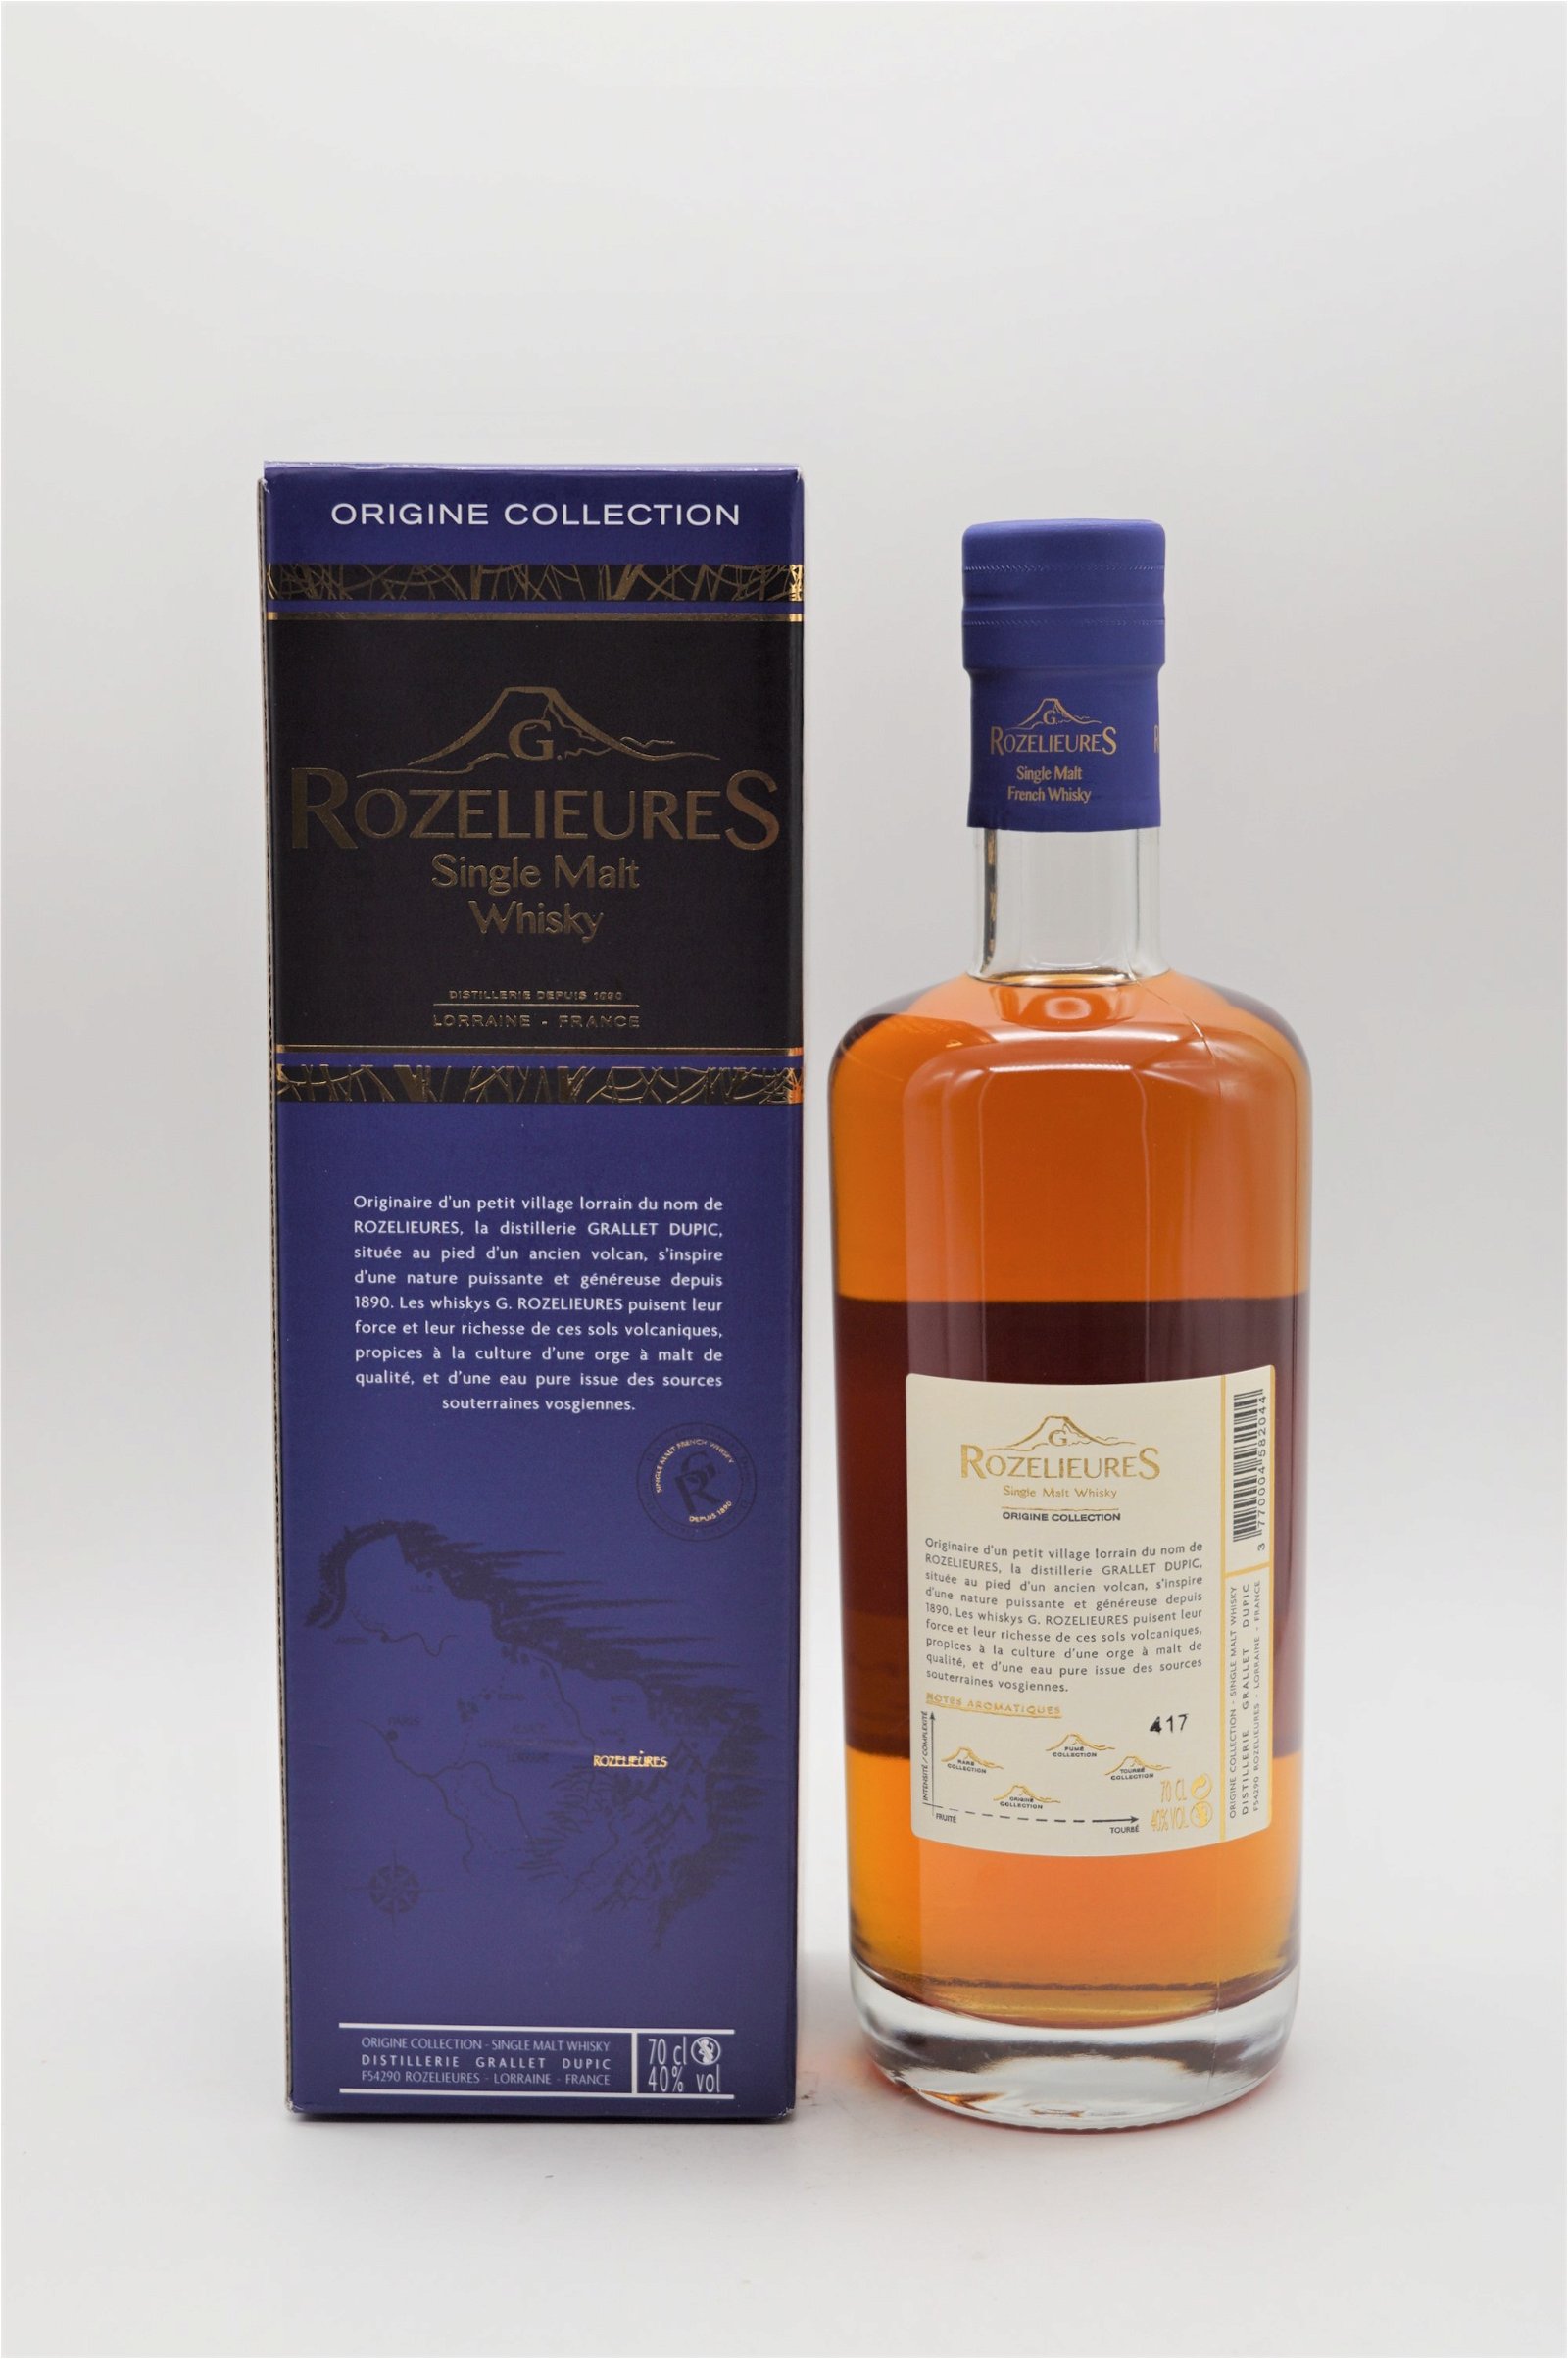 G. Rozelieures Orgine Collection Single Malt Whisky 